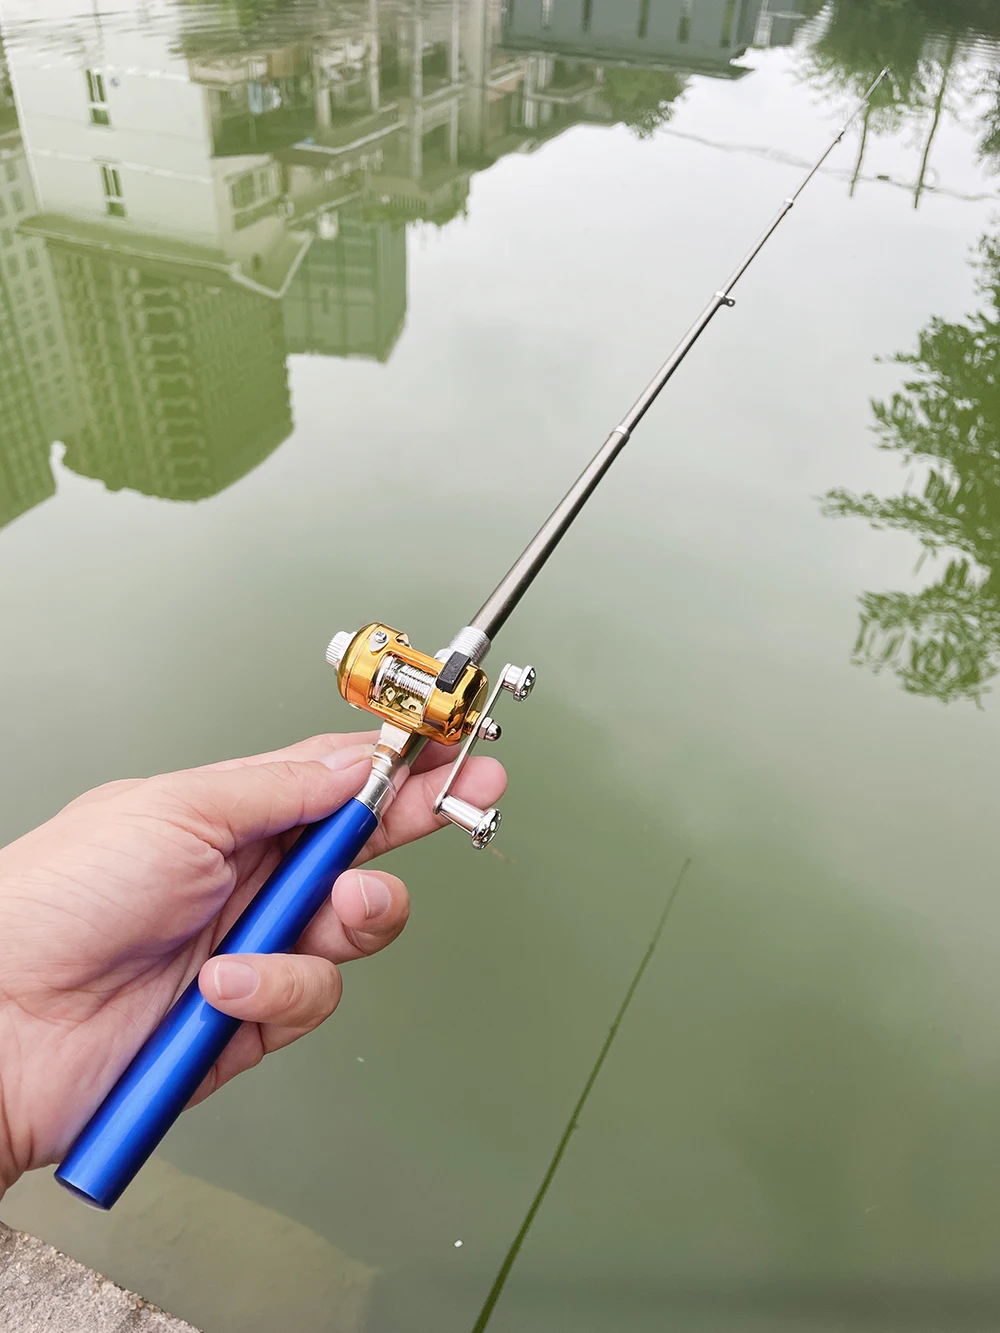 https://ae01.alicdn.com/kf/H59b28fd3499e4bf798ea310cc7604341Z/Fishing-Rod-and-Reel-Combo-Set-Telescopic-Pocket-Pen-Fishing-Rod-with-Mini-Trolling-Reel.jpg